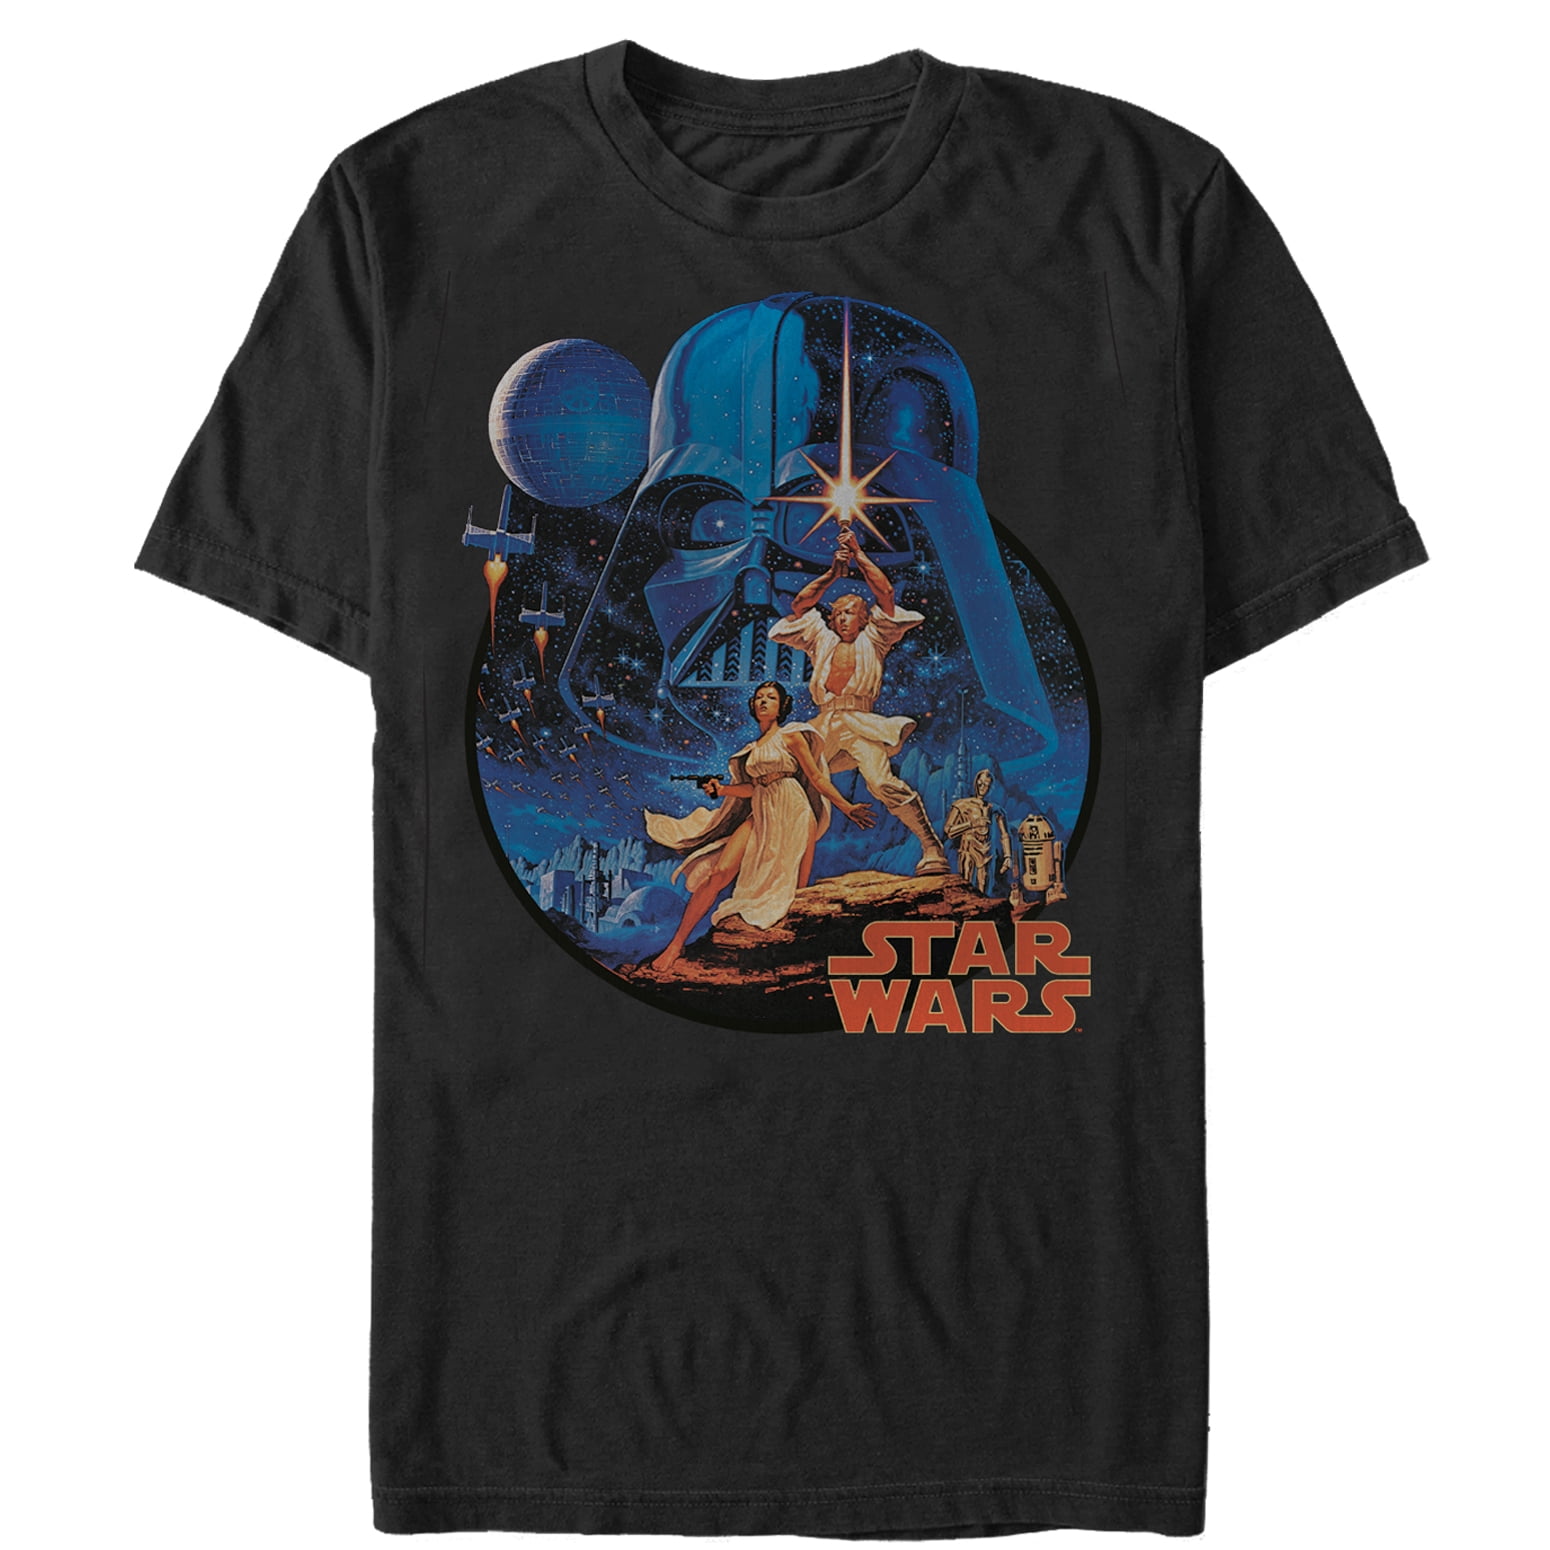 Star Wars - Men's Star Wars Vintage Art T-Shirt Black - Walmart.com ...